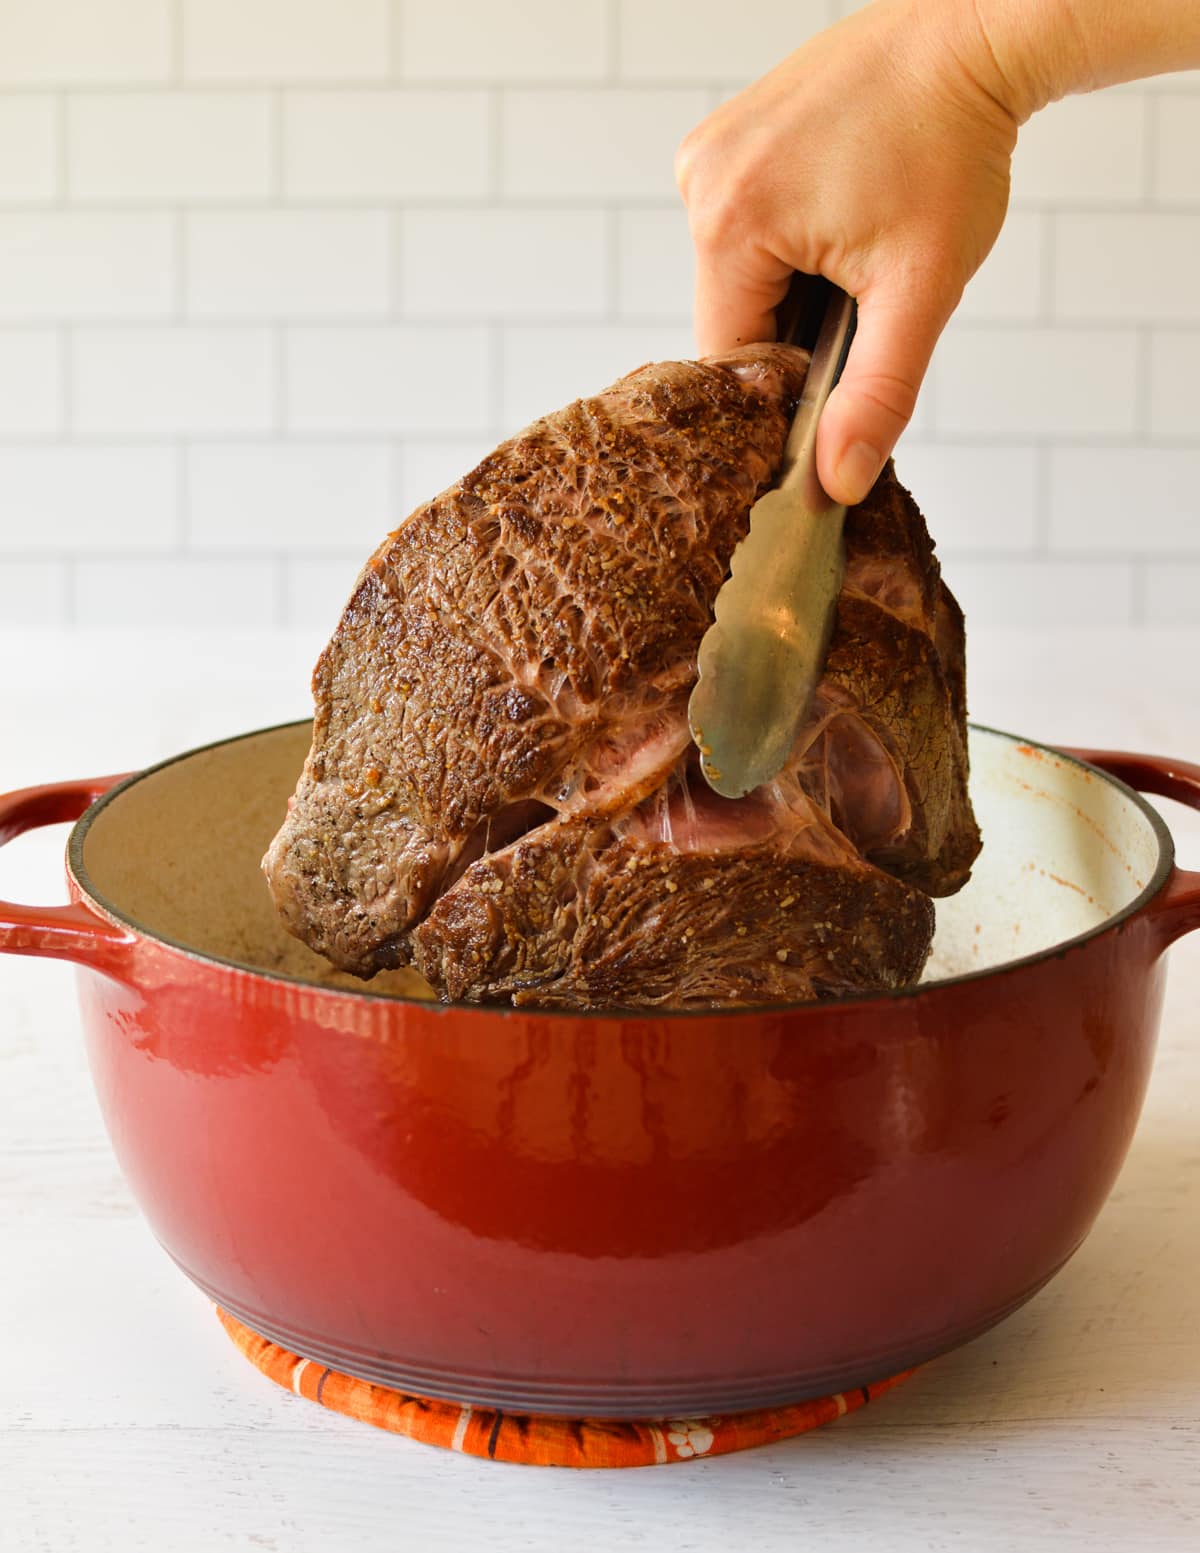 tongs holding chuck roast in pot.